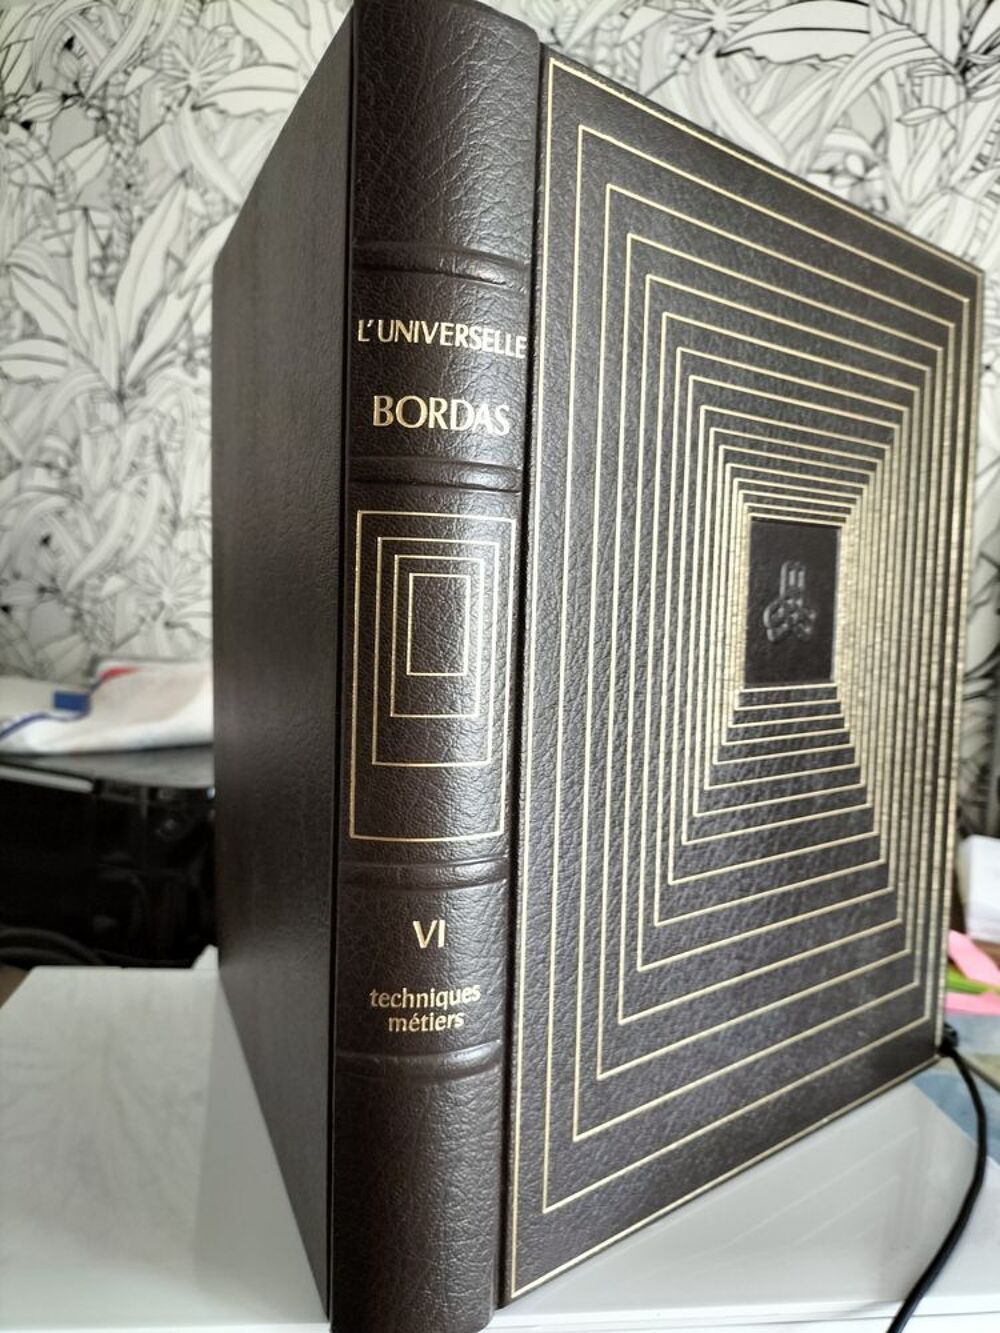 lot de 10 volumes encyclopedie universelles Bordas +3 logos
